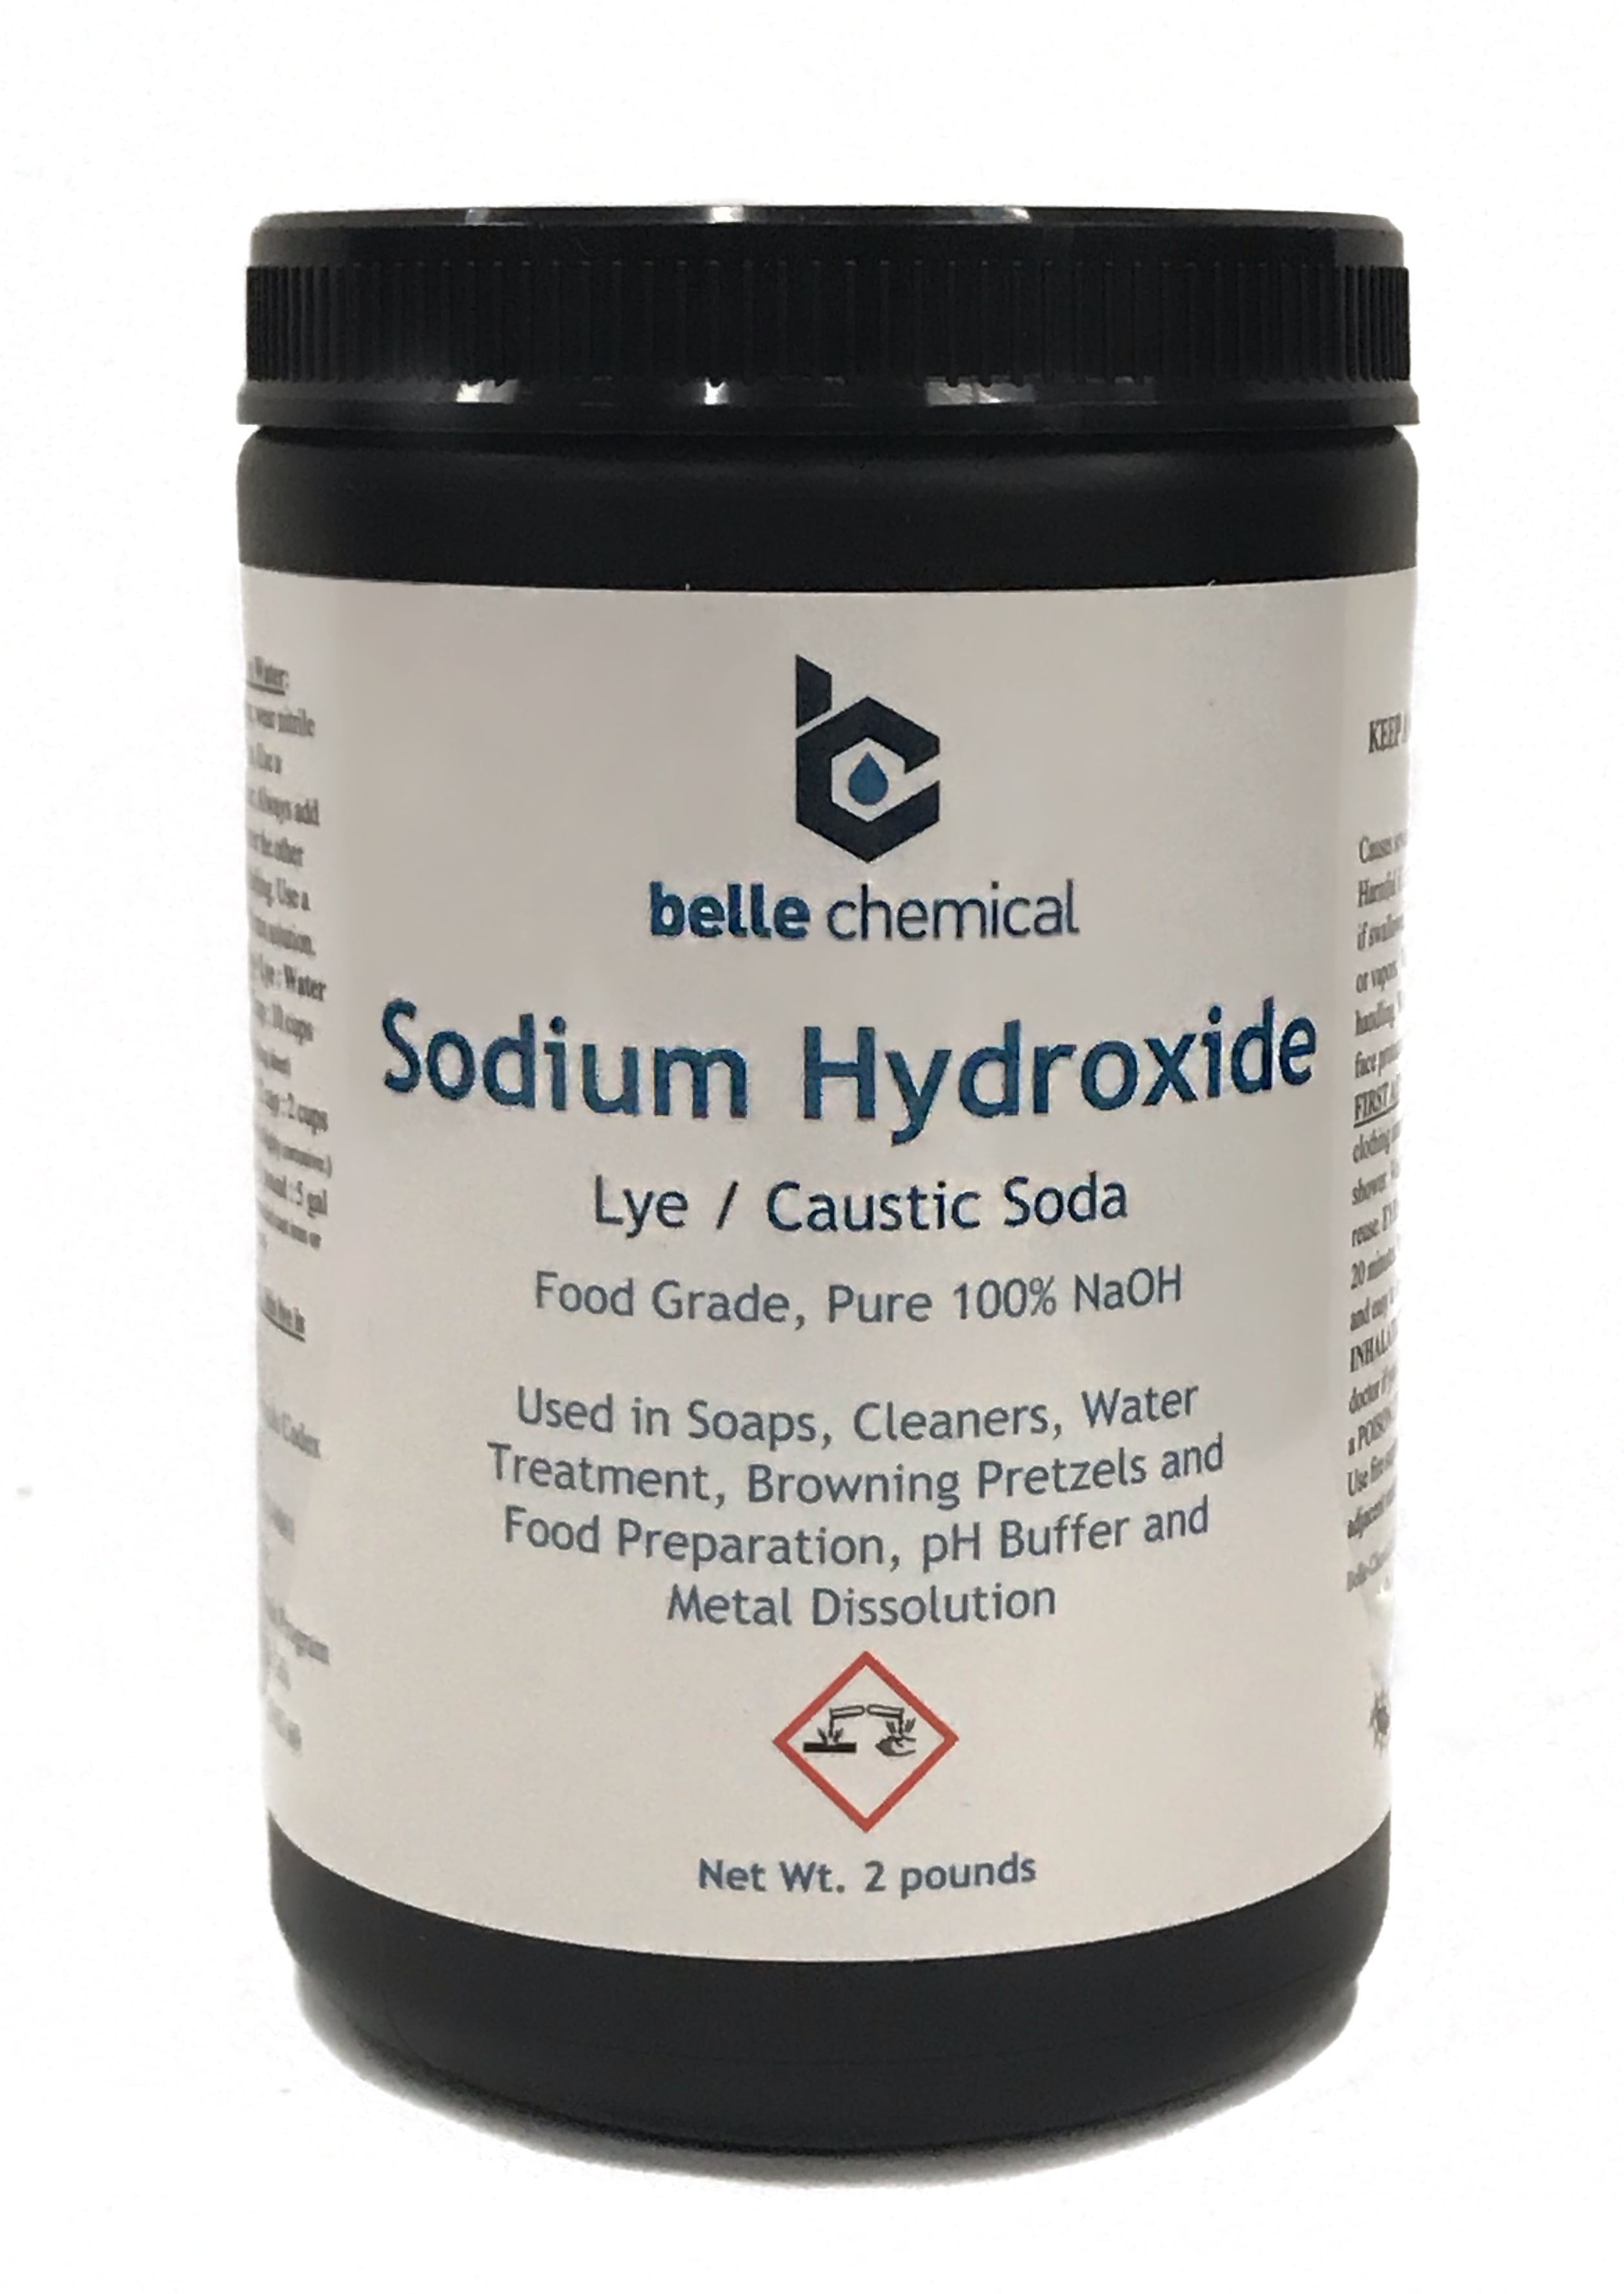 Sodium Hydroxide Pure Food Grade Caustic Soda Lye 2 Pound Jar